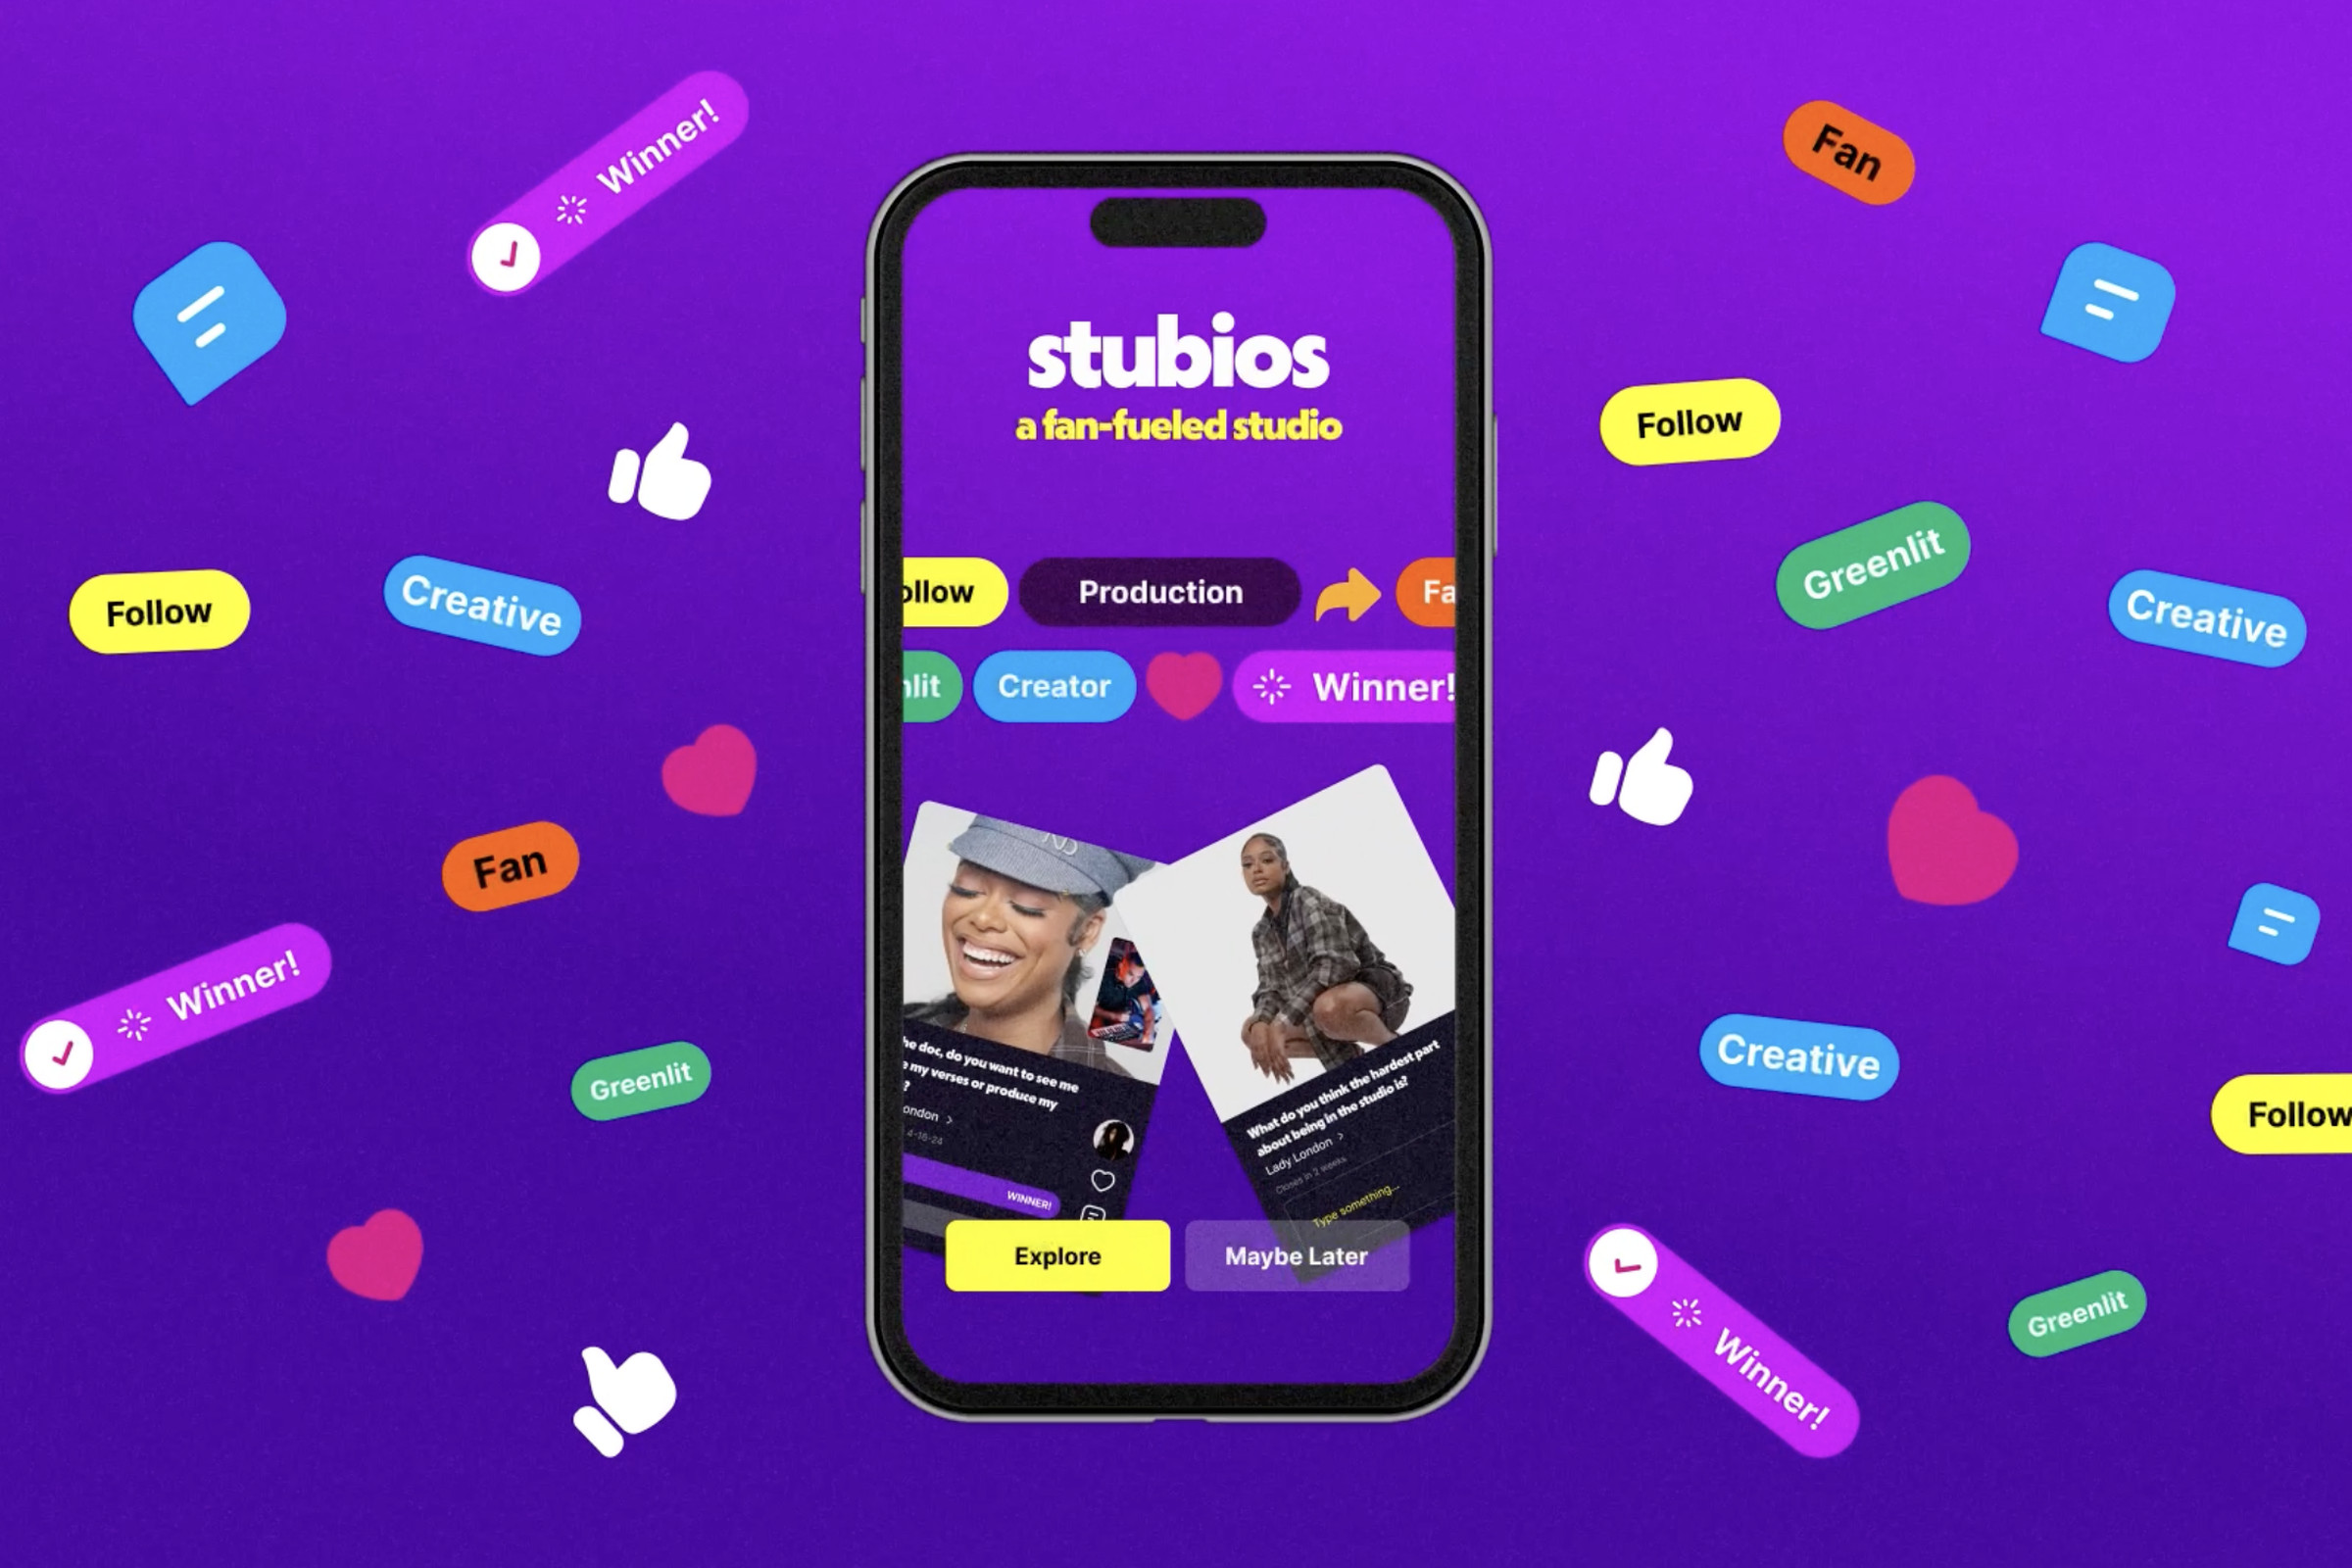 Concept art of the Stubios app.